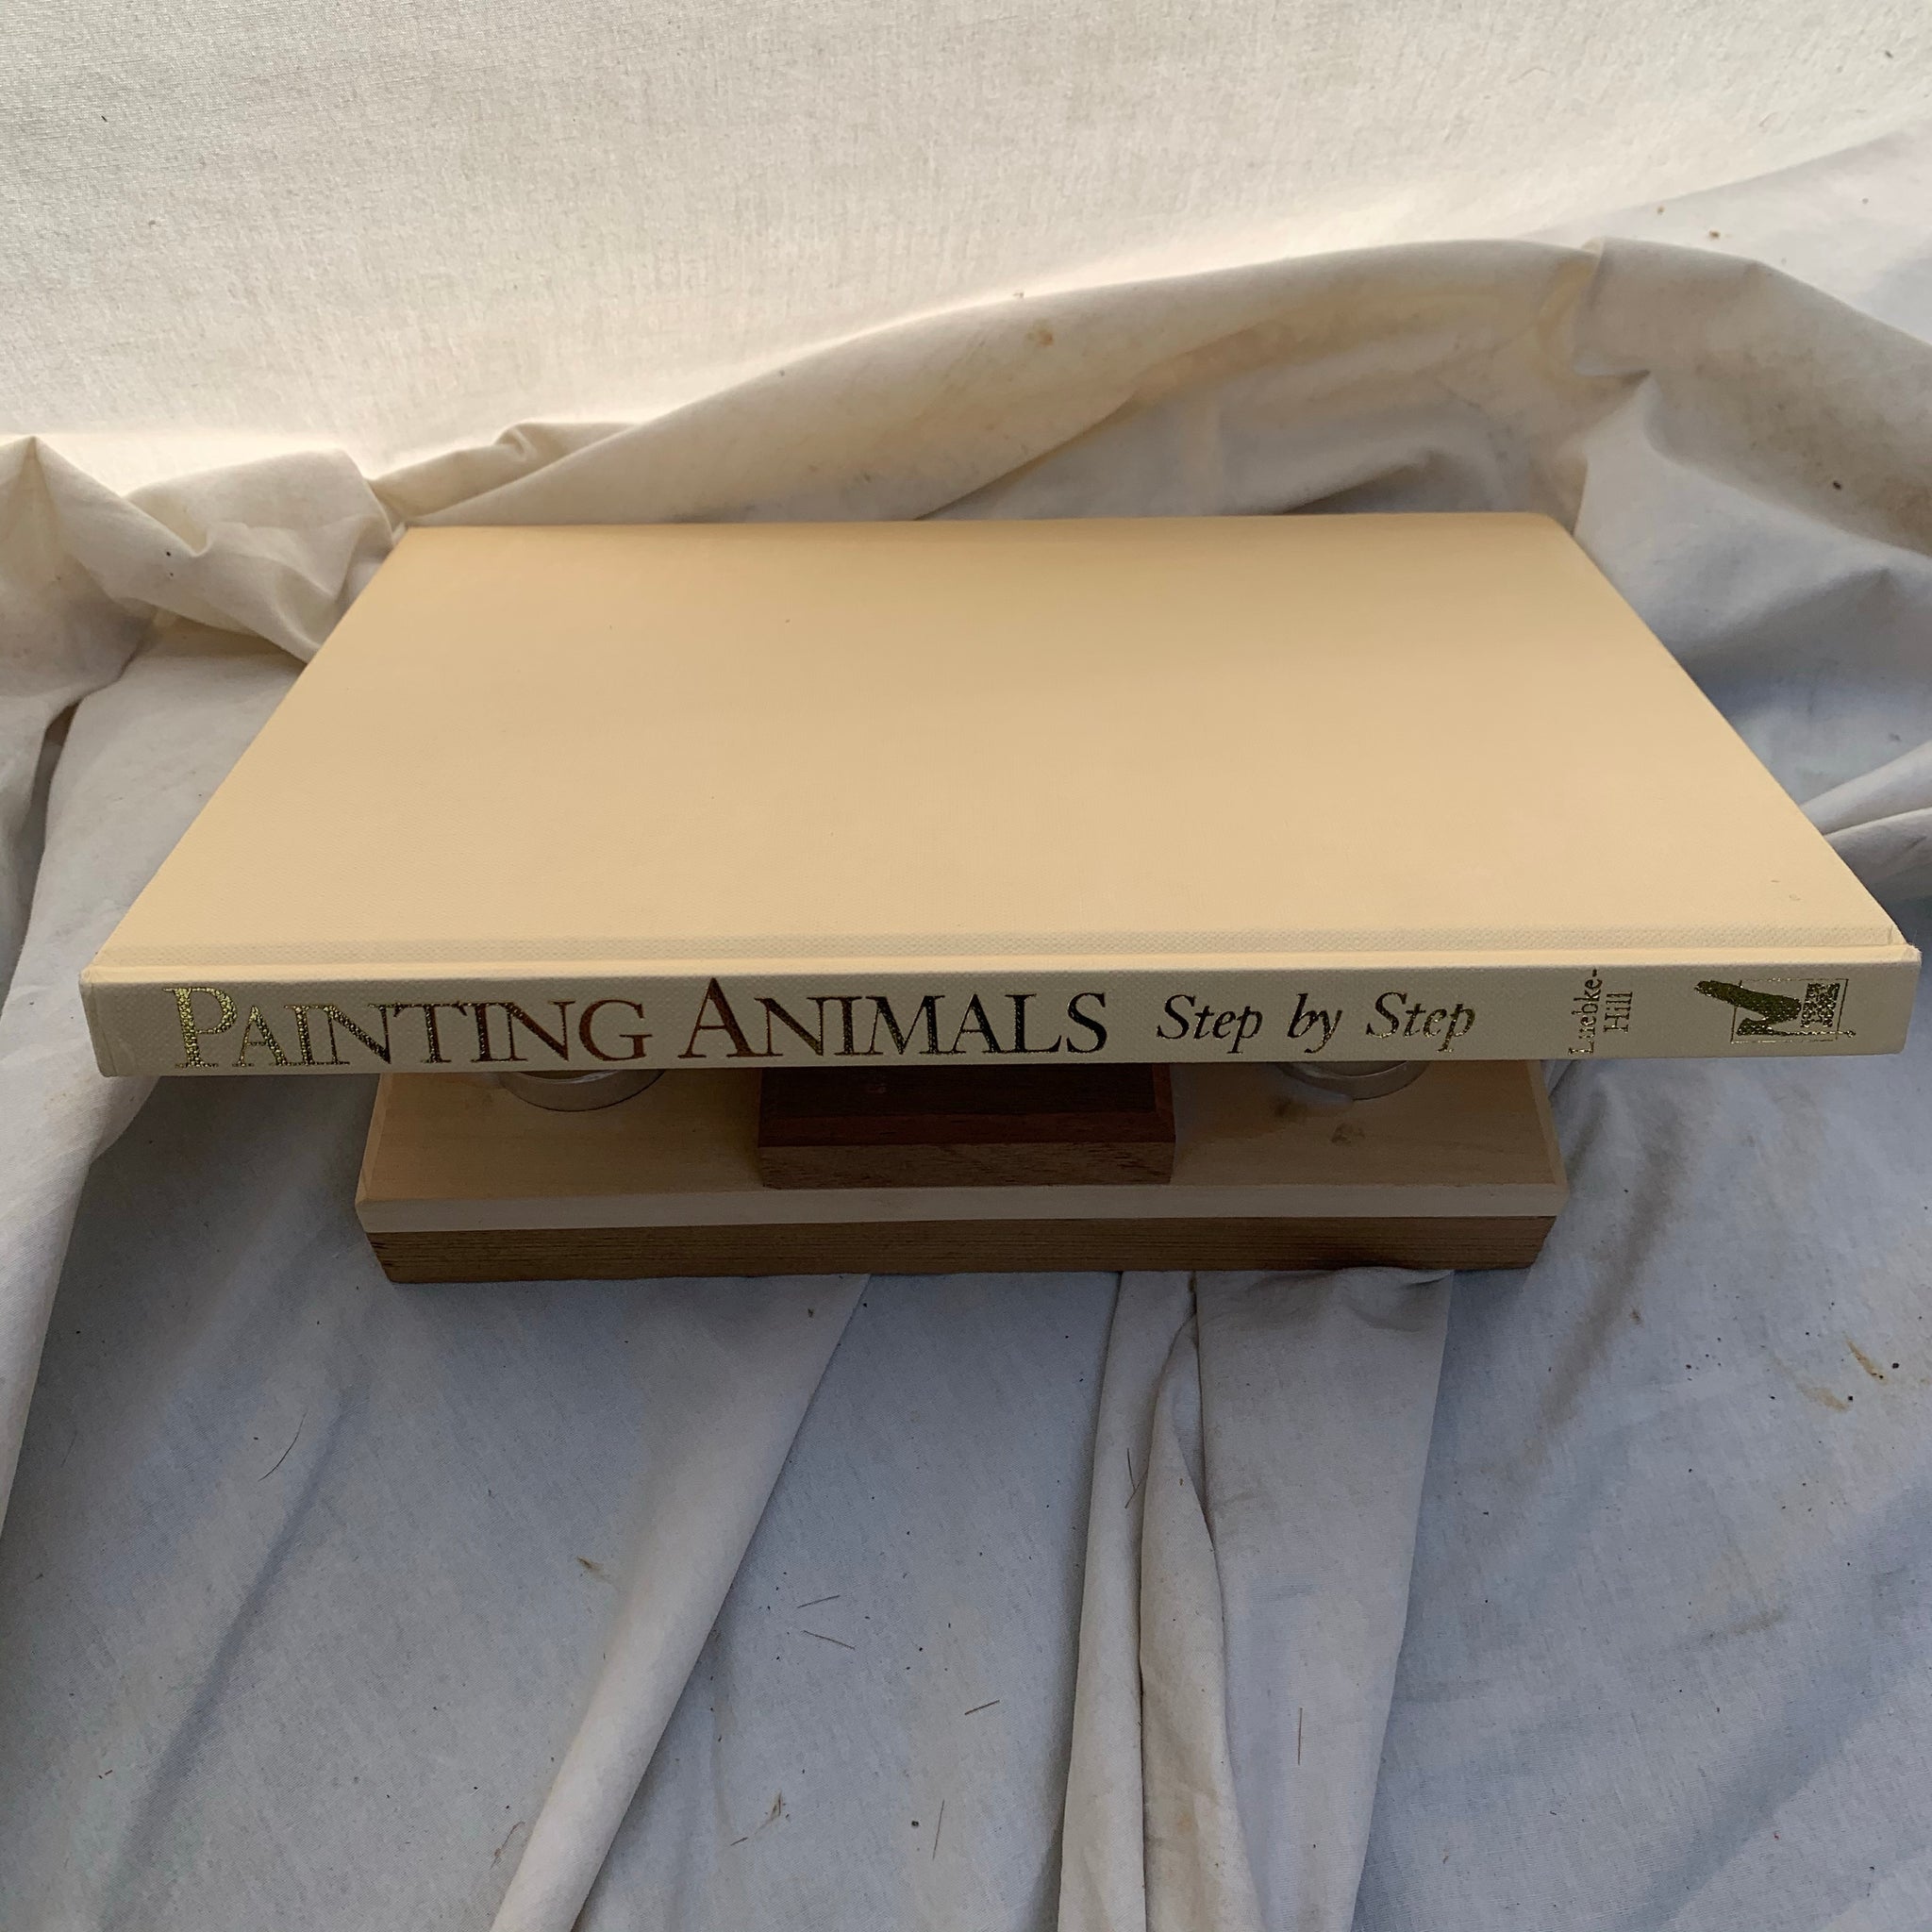 Vintage Coffee Table Book - "Painting Animals Step-By-Step" (1992) - Shop Vanilla Vintage